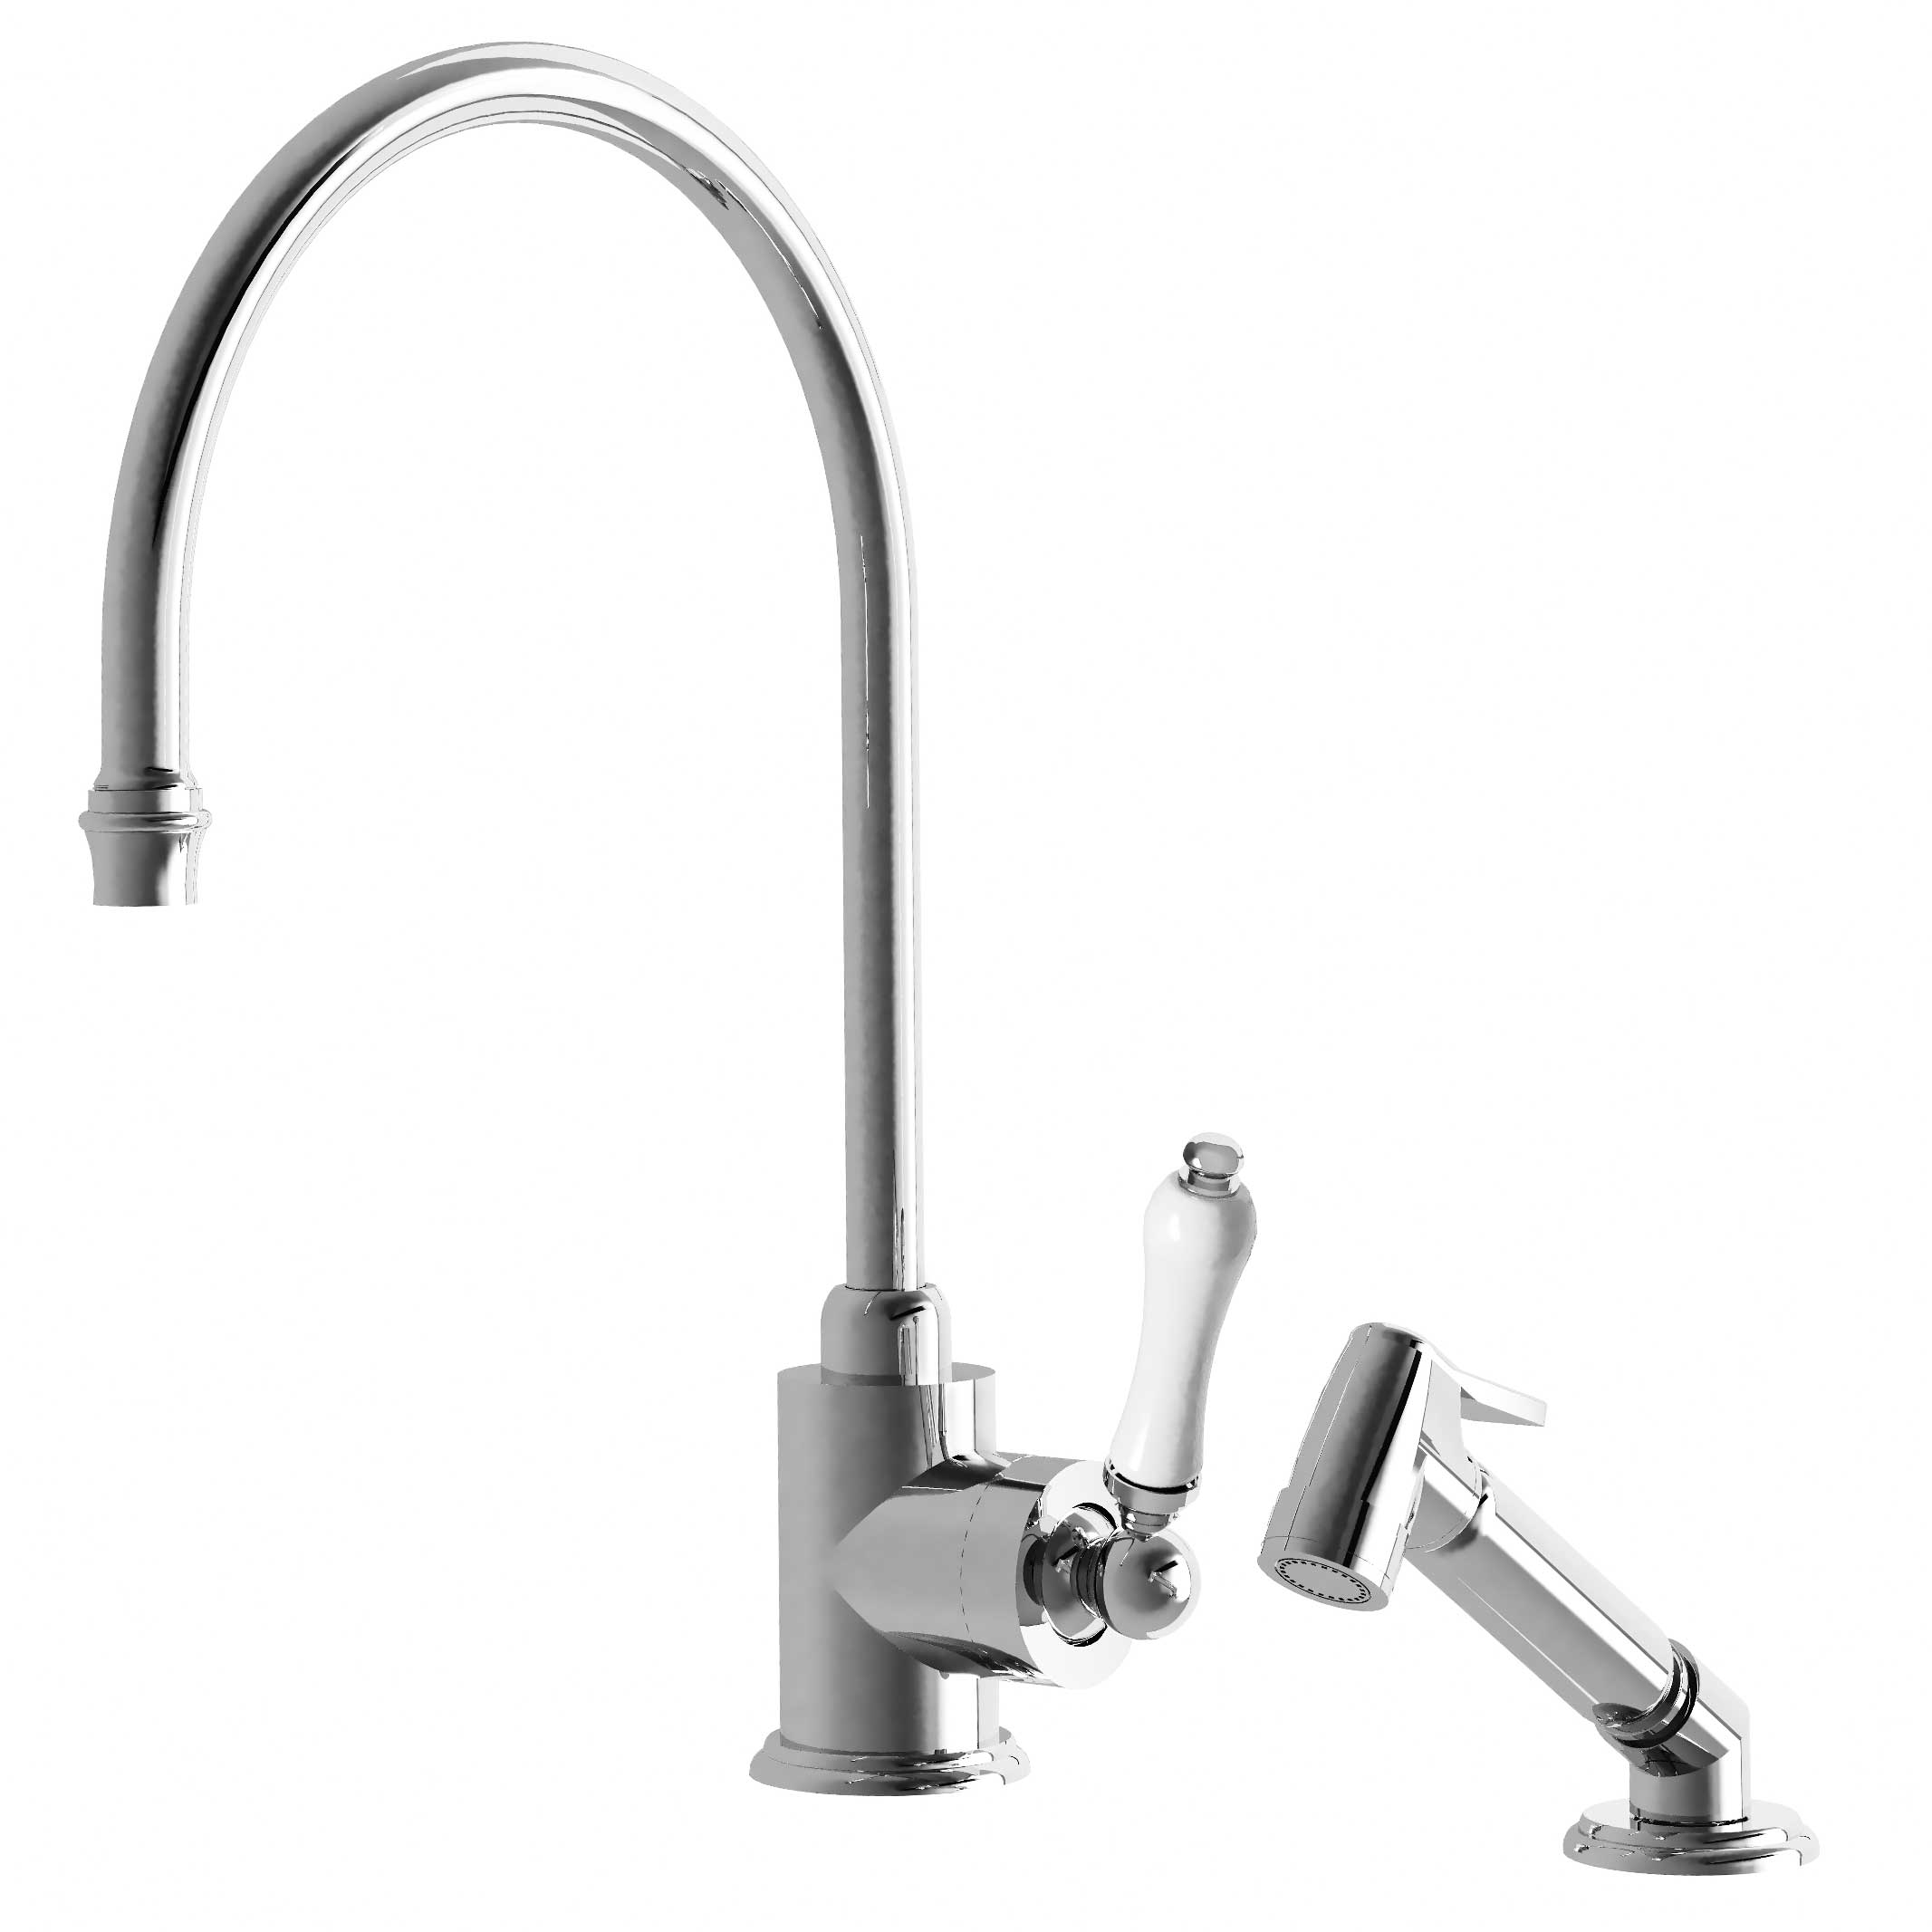 MK22-1101MS Single-hole kitchen lever mixer & handspray